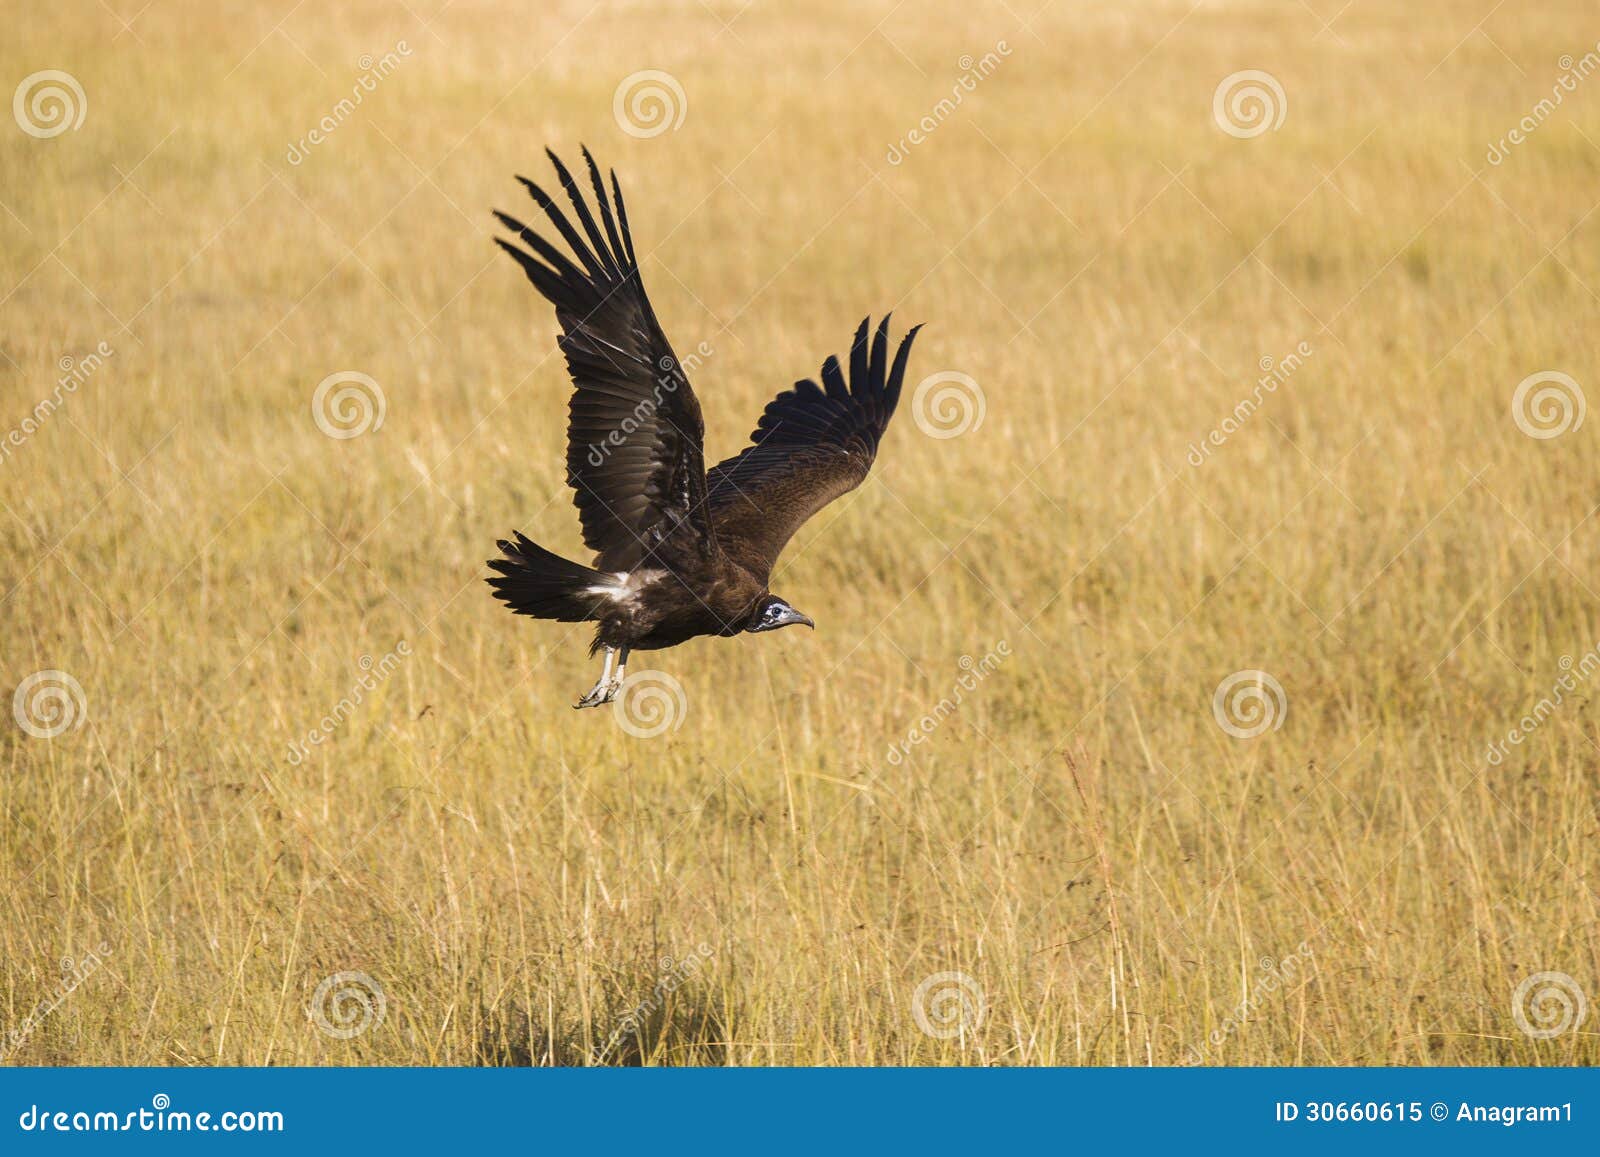 hooded vulture in flight